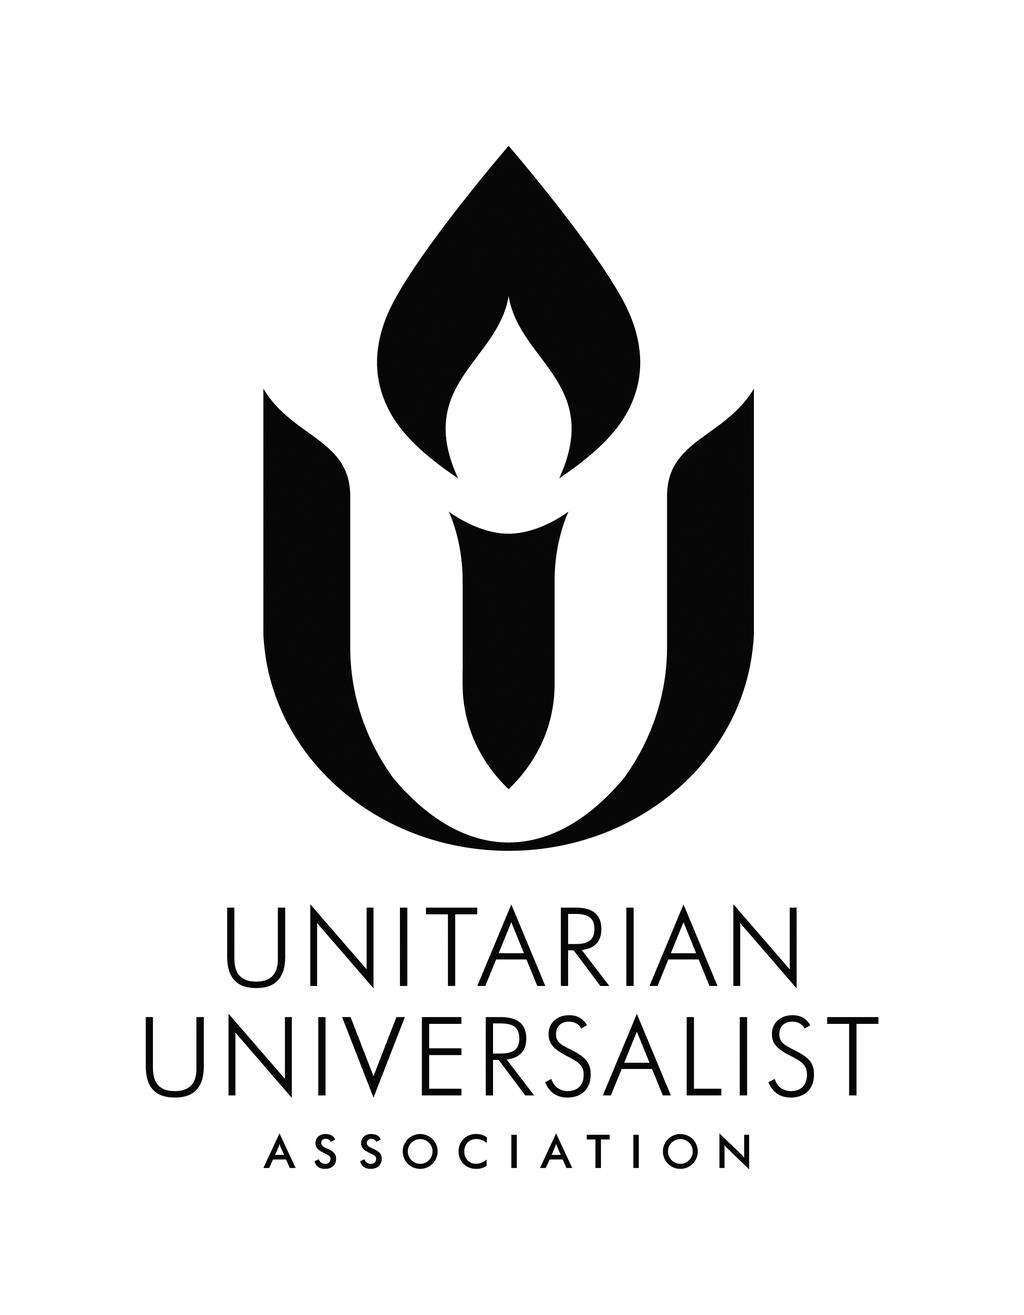 Unitarian Universalist Funding Program Fund for Unitarian Universalism Grants Made 2014 $16,500 CampUUs Boston Jamaica Plain, MA CampUUsBoston To establish a sustainable professional UU campus